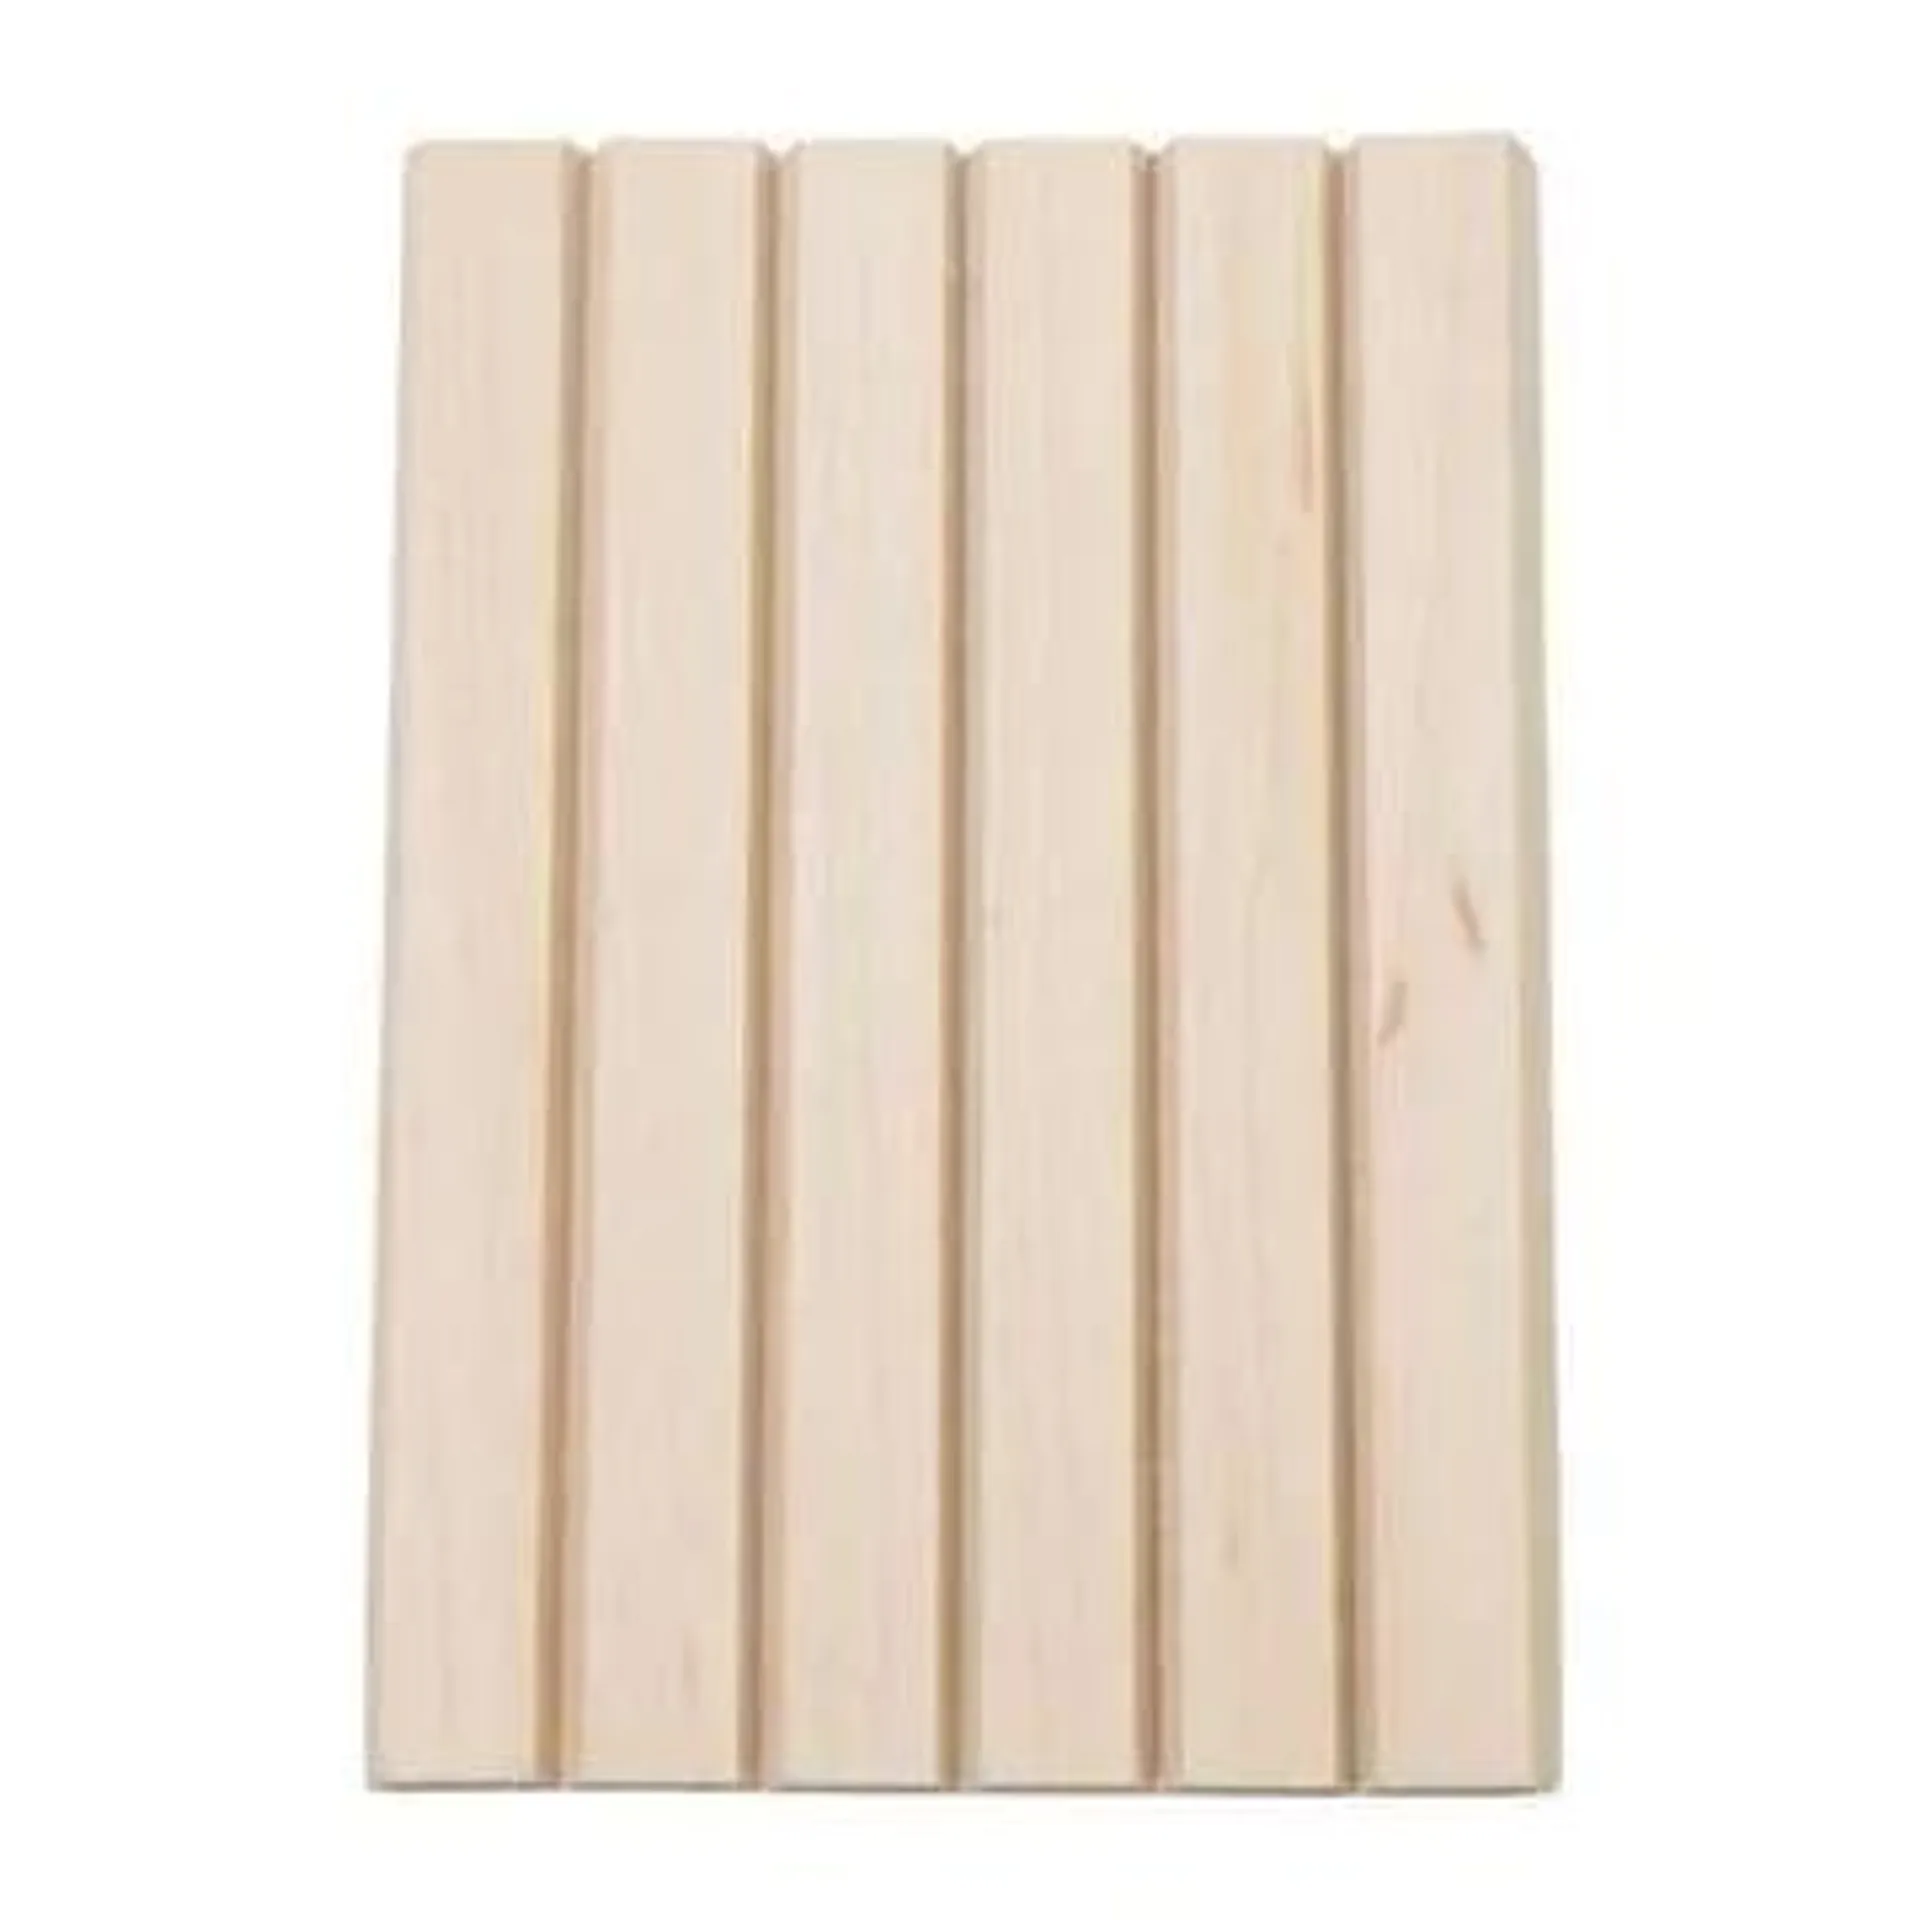 Restorers 1/2 Inch Trapezoid Wood Veneer Tambour Panel